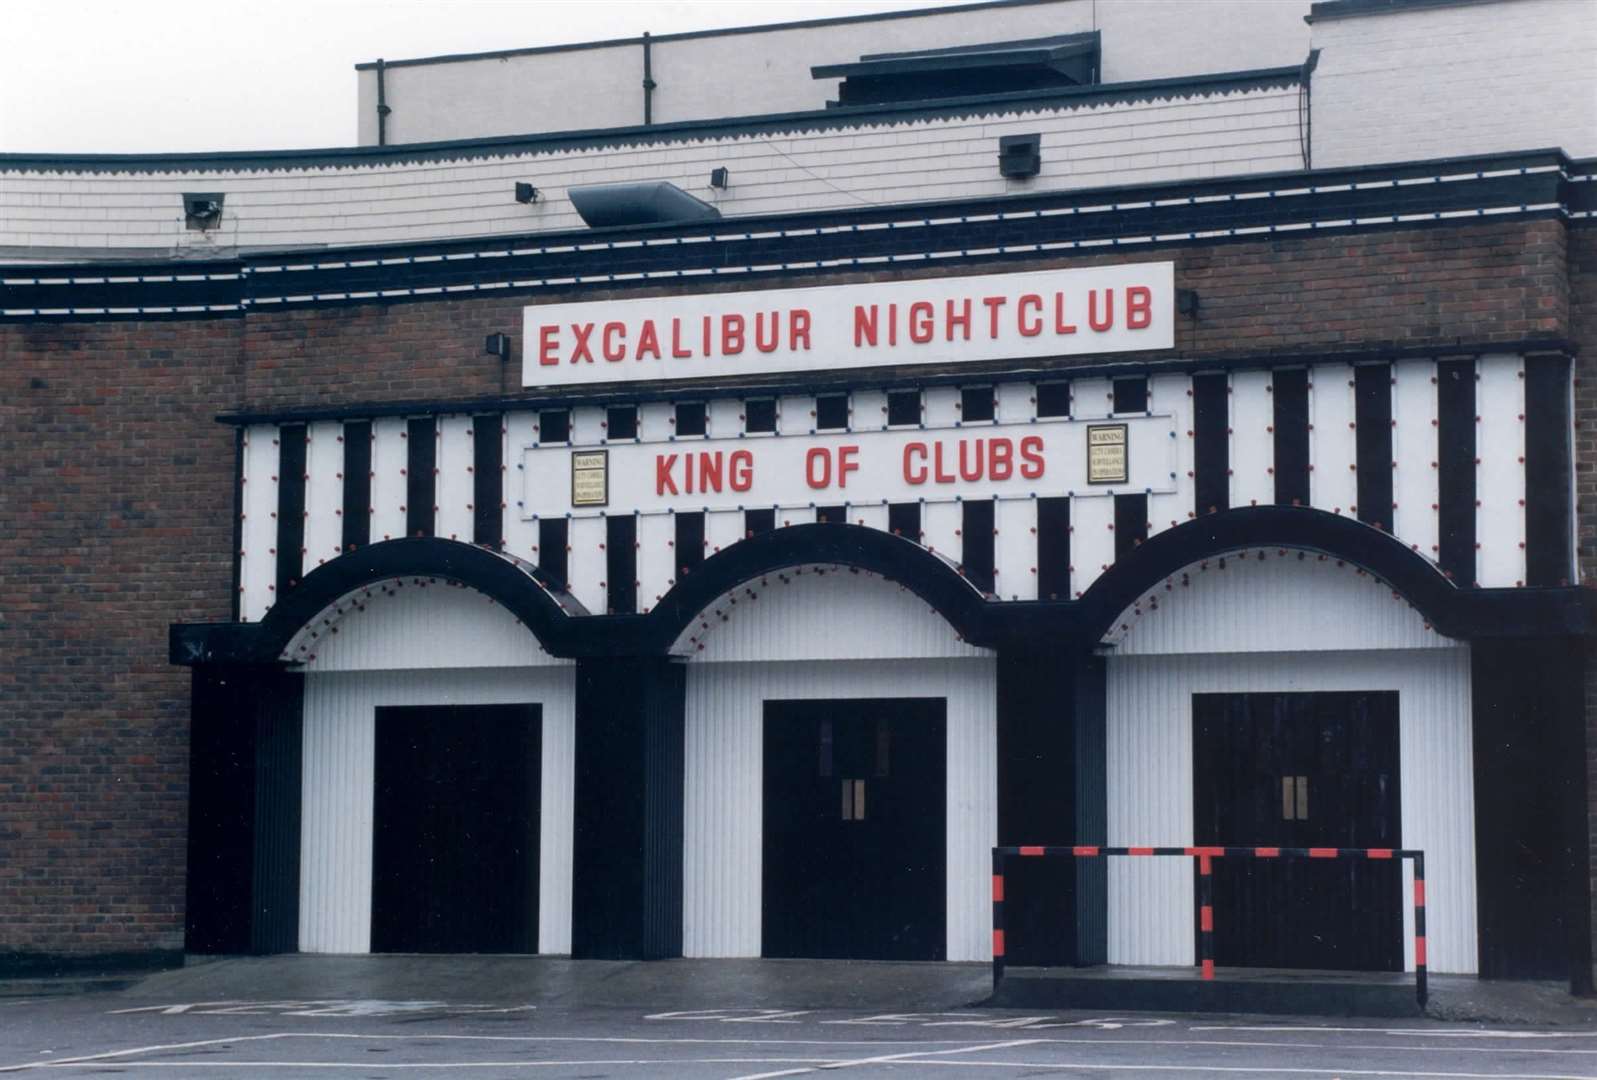 Excalibur Nightclub, Gillingham, Kent, in 1997